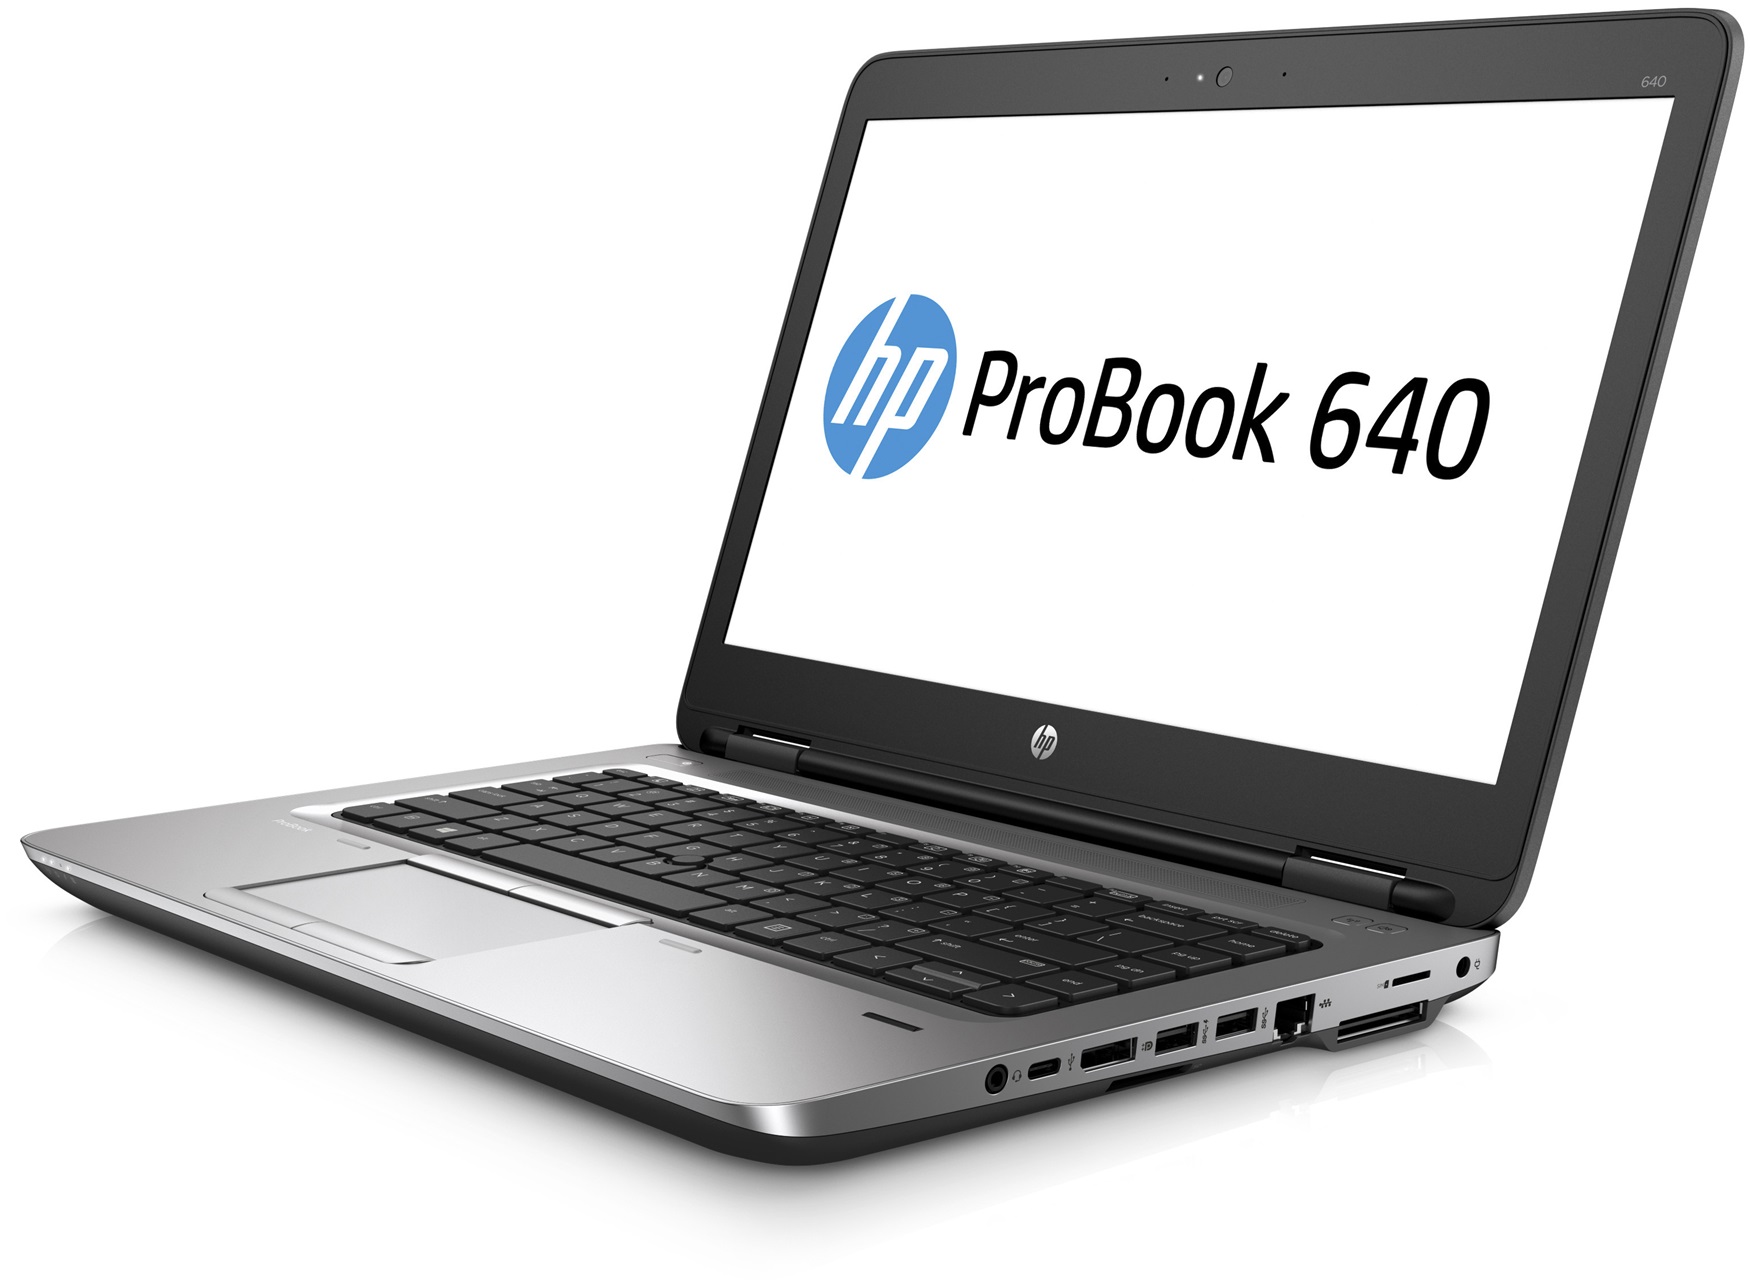 Portátil HP EliteBook 640 G2 GRADO B (Intel Core i5 6200U 2.3Ghz/8GB/120SSD/14HD/DVD/W10P) Preinstalado